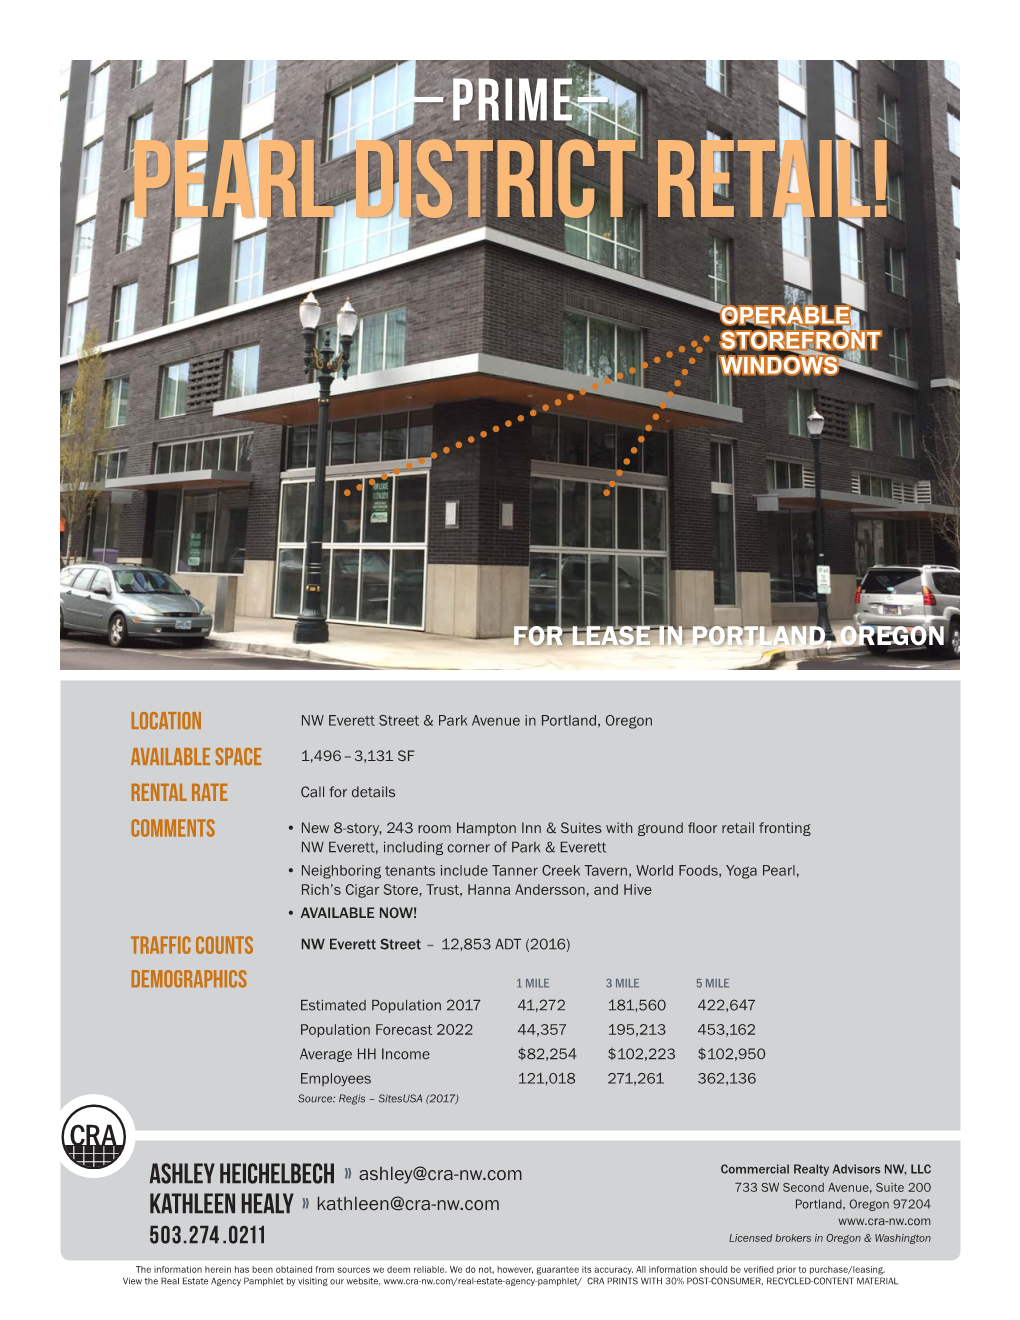 Pearl District Retail!